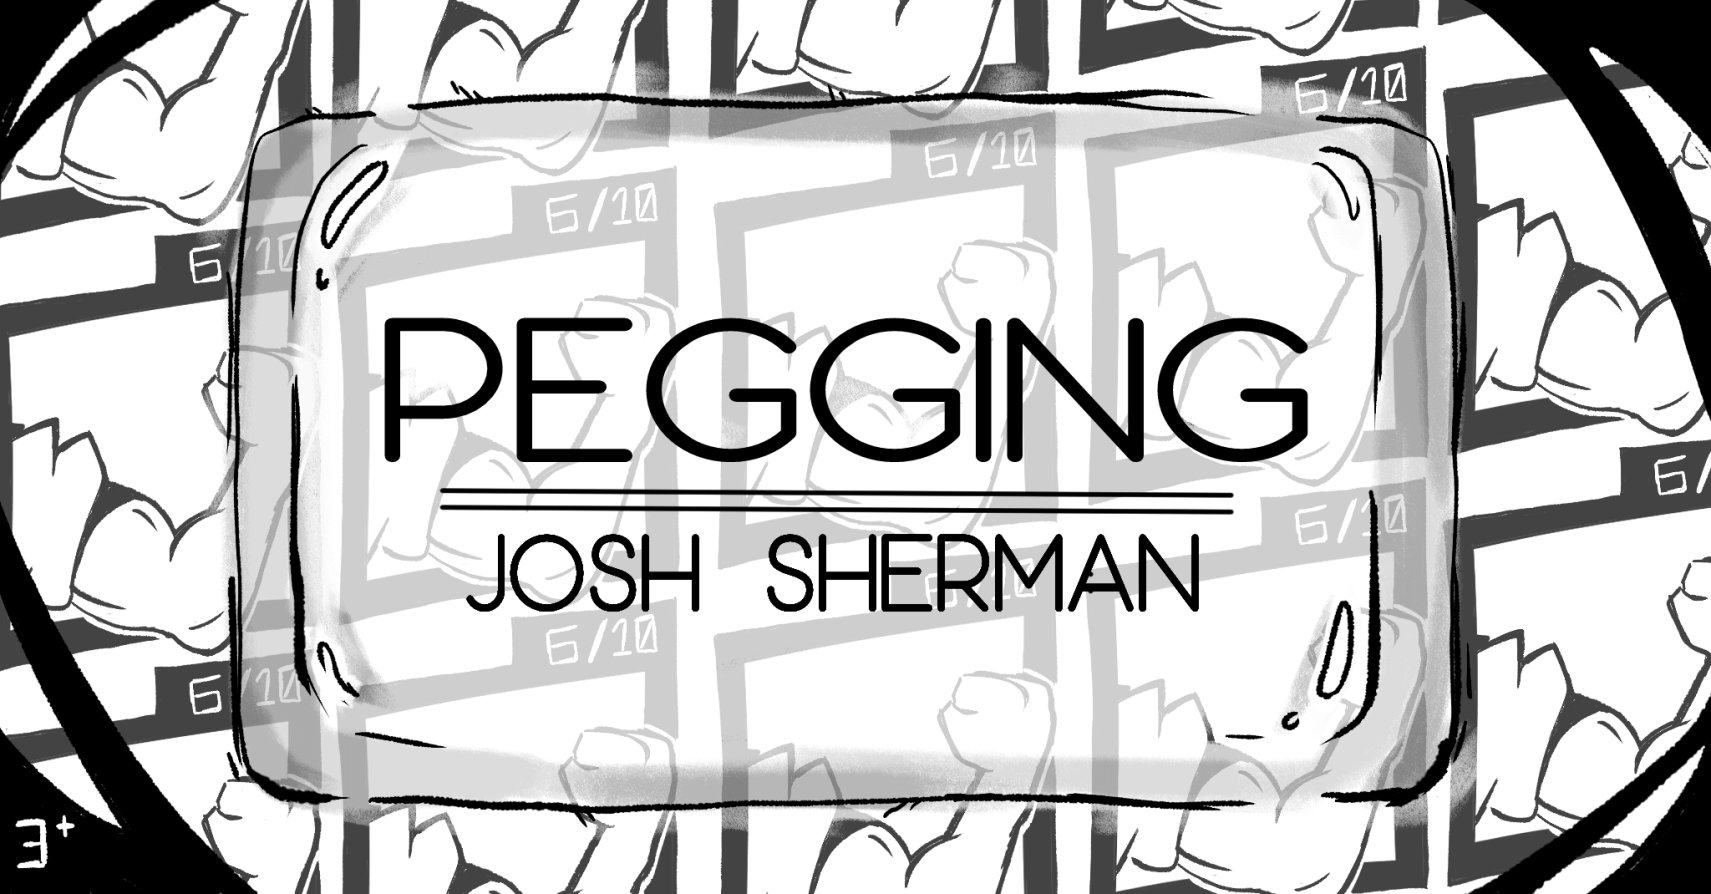 PEGGING by Josh Sherman